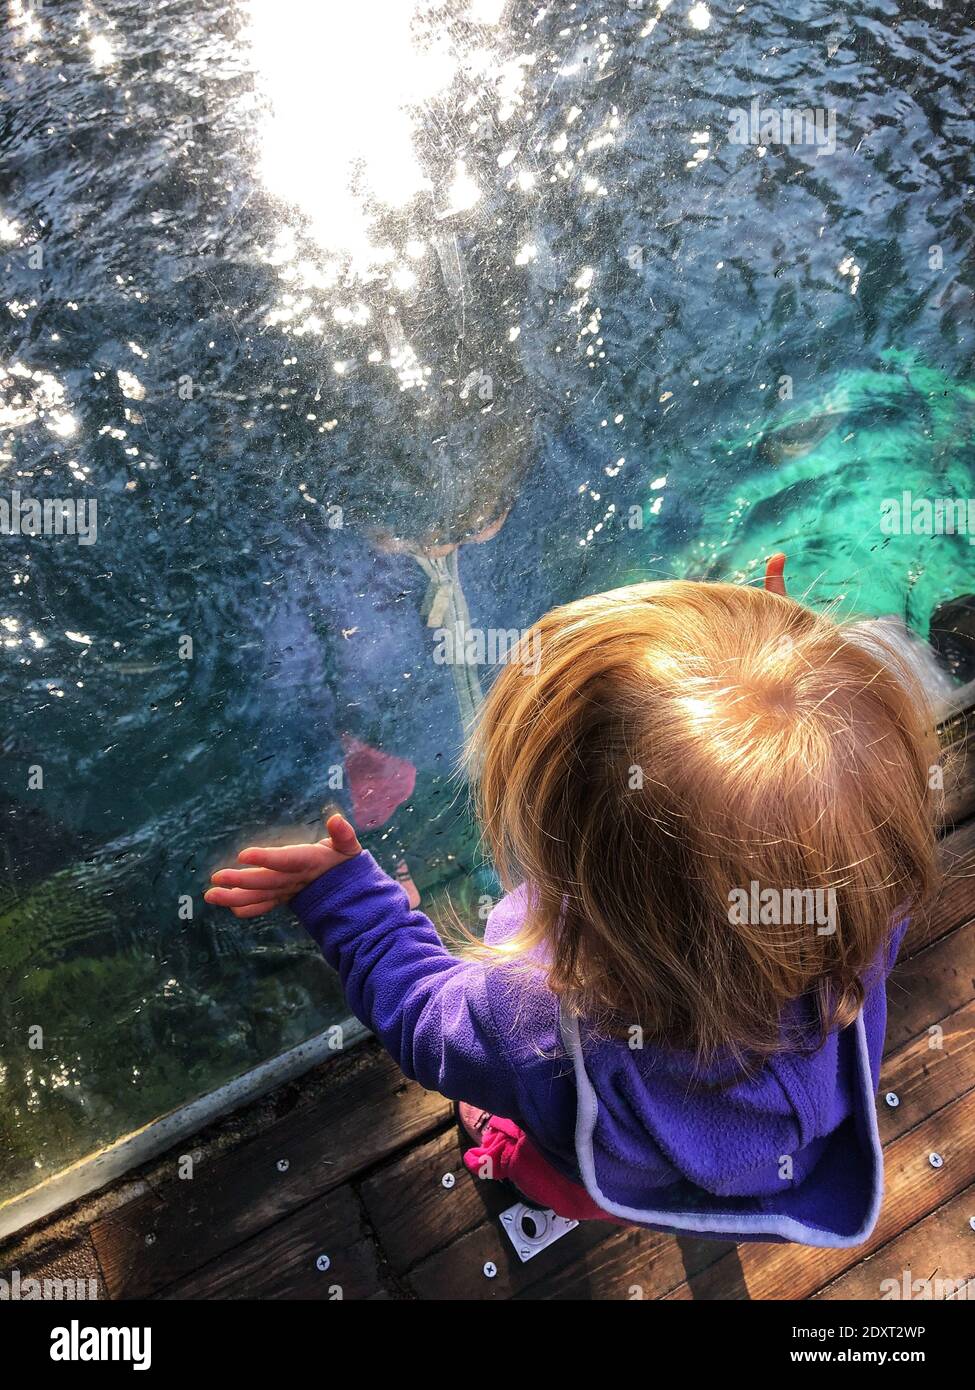 High Angle View Of Girl Looking At Aquarium Stock Photo